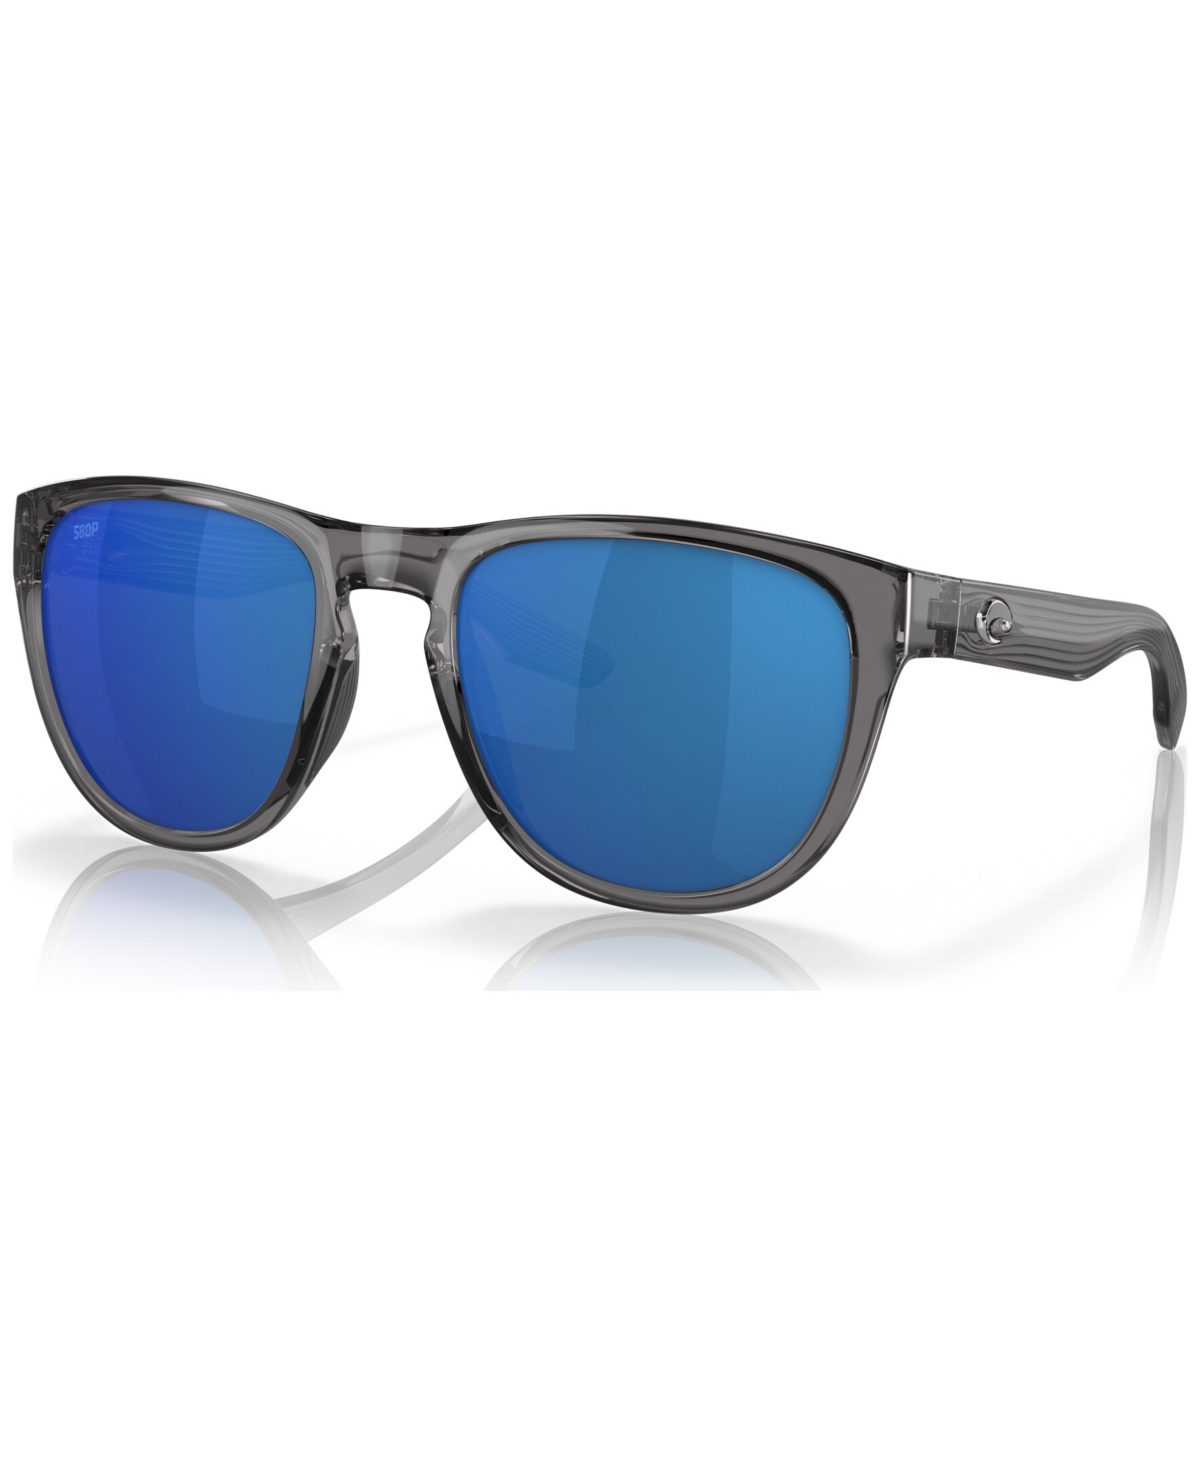 Unisex Polarized Sunglasses, 6S908255-zp - Gray Crystal